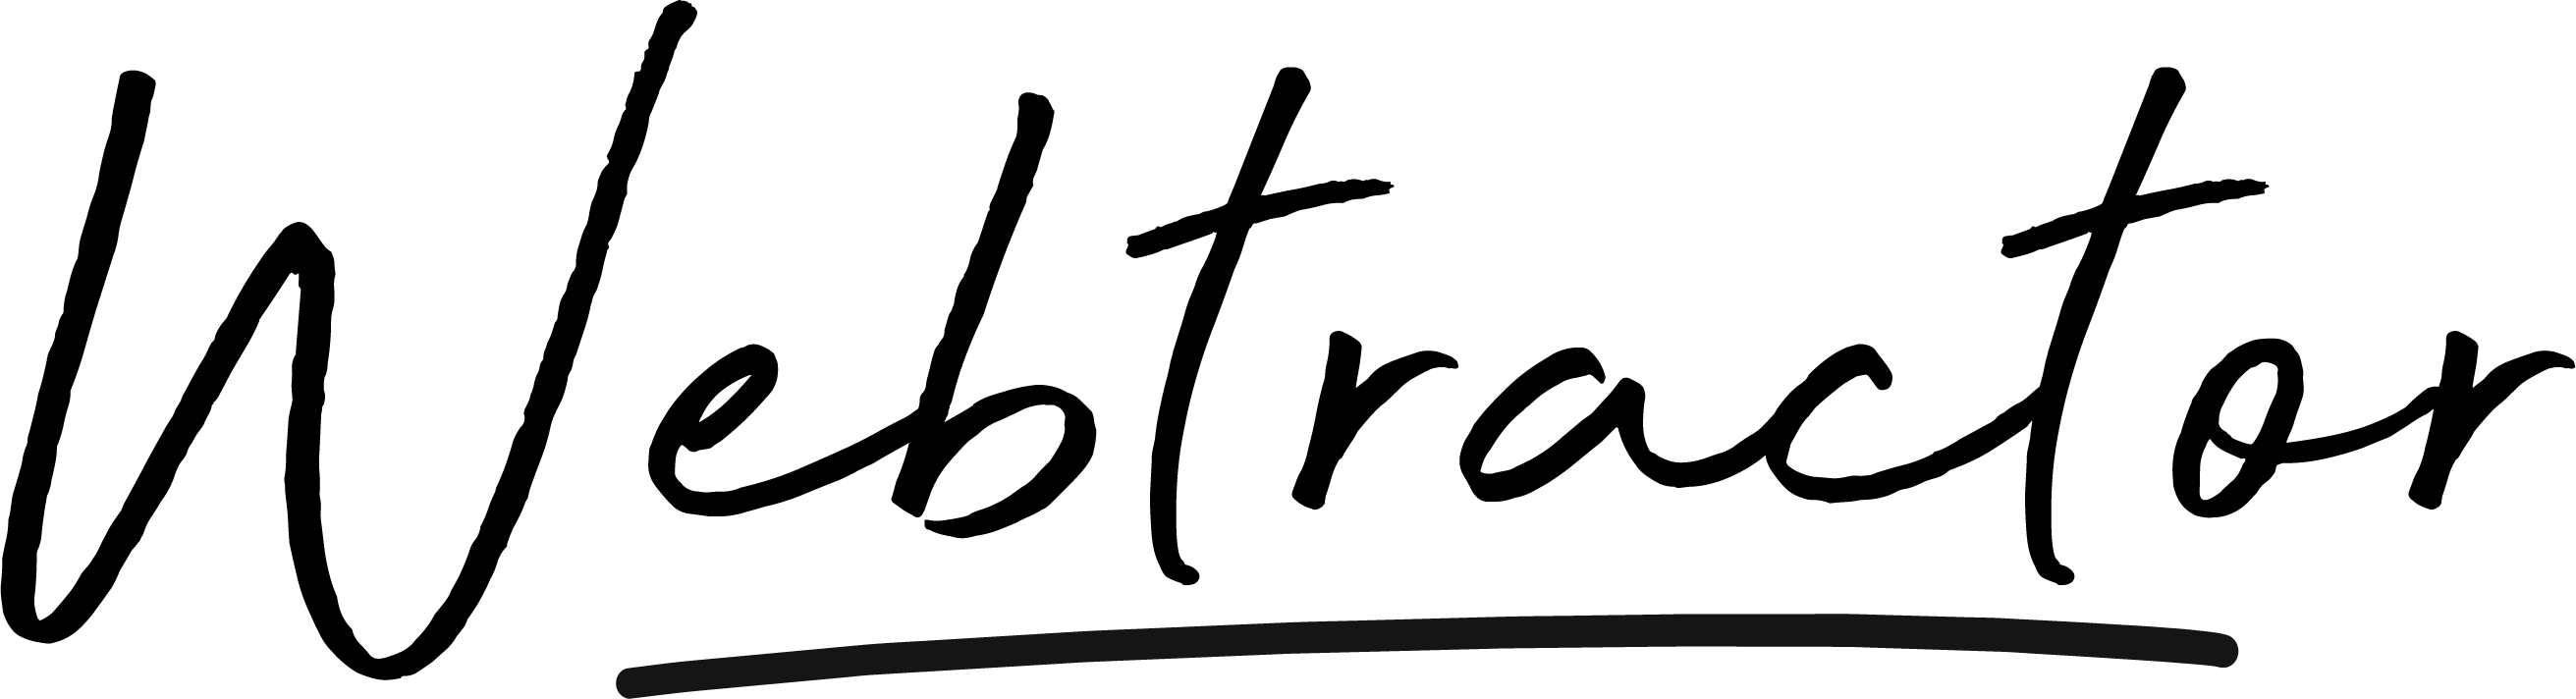 Webtractor Logo Dark 2020